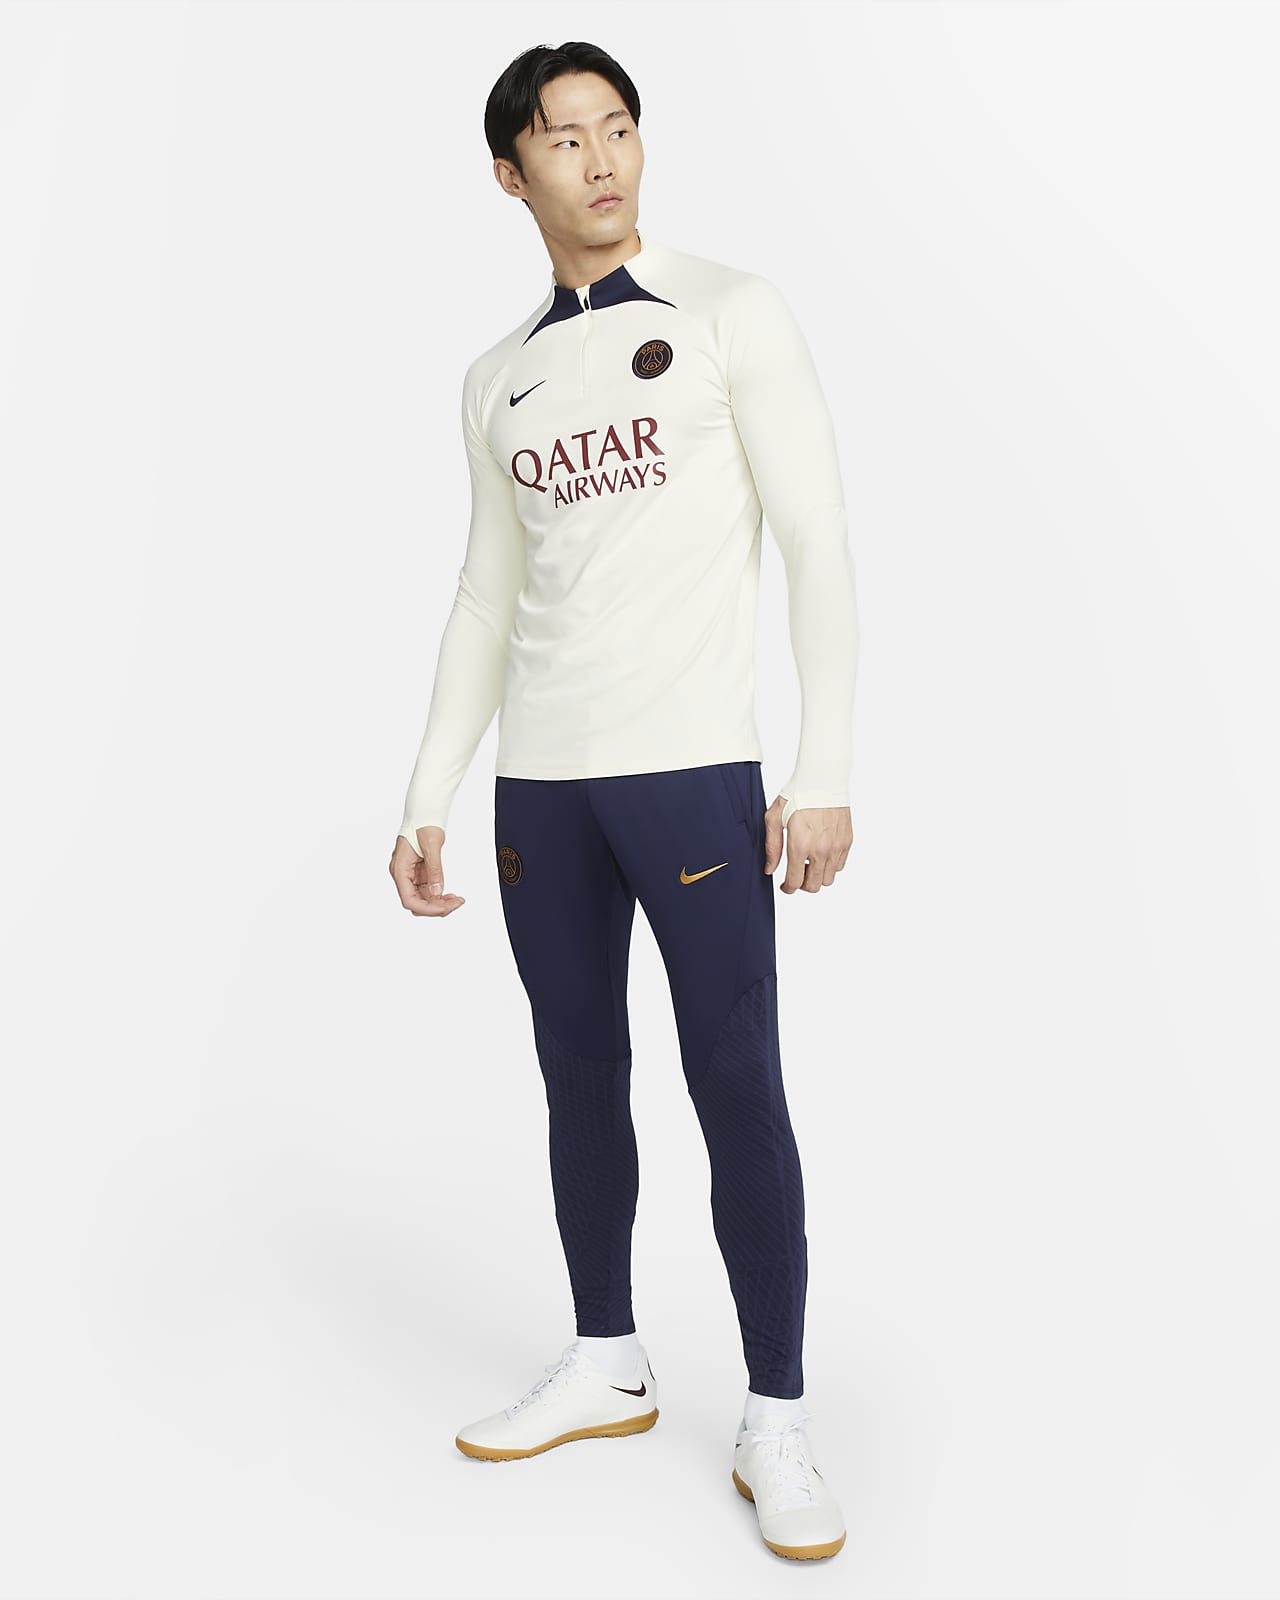 Paris Saint-Germain Strike Men's Nike Dri-FIT Knit Soccer Pants